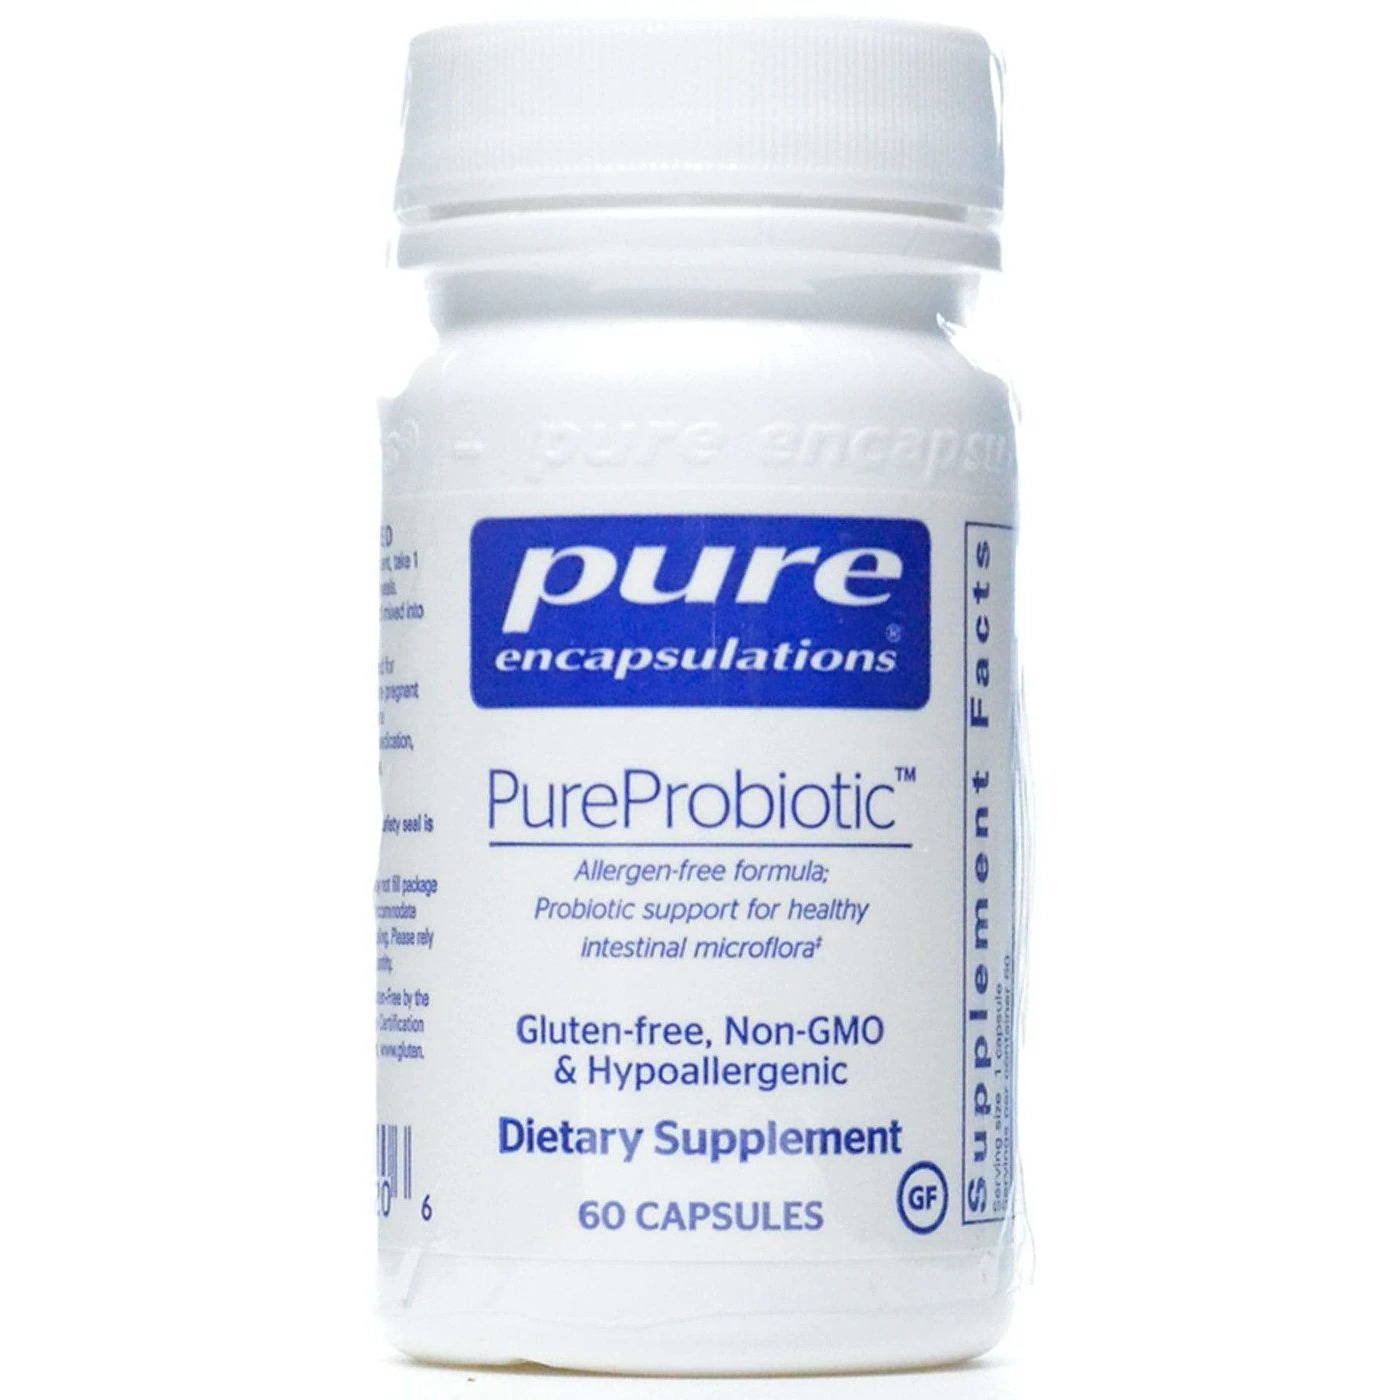 PureProbiotic by Pure Encapsulations